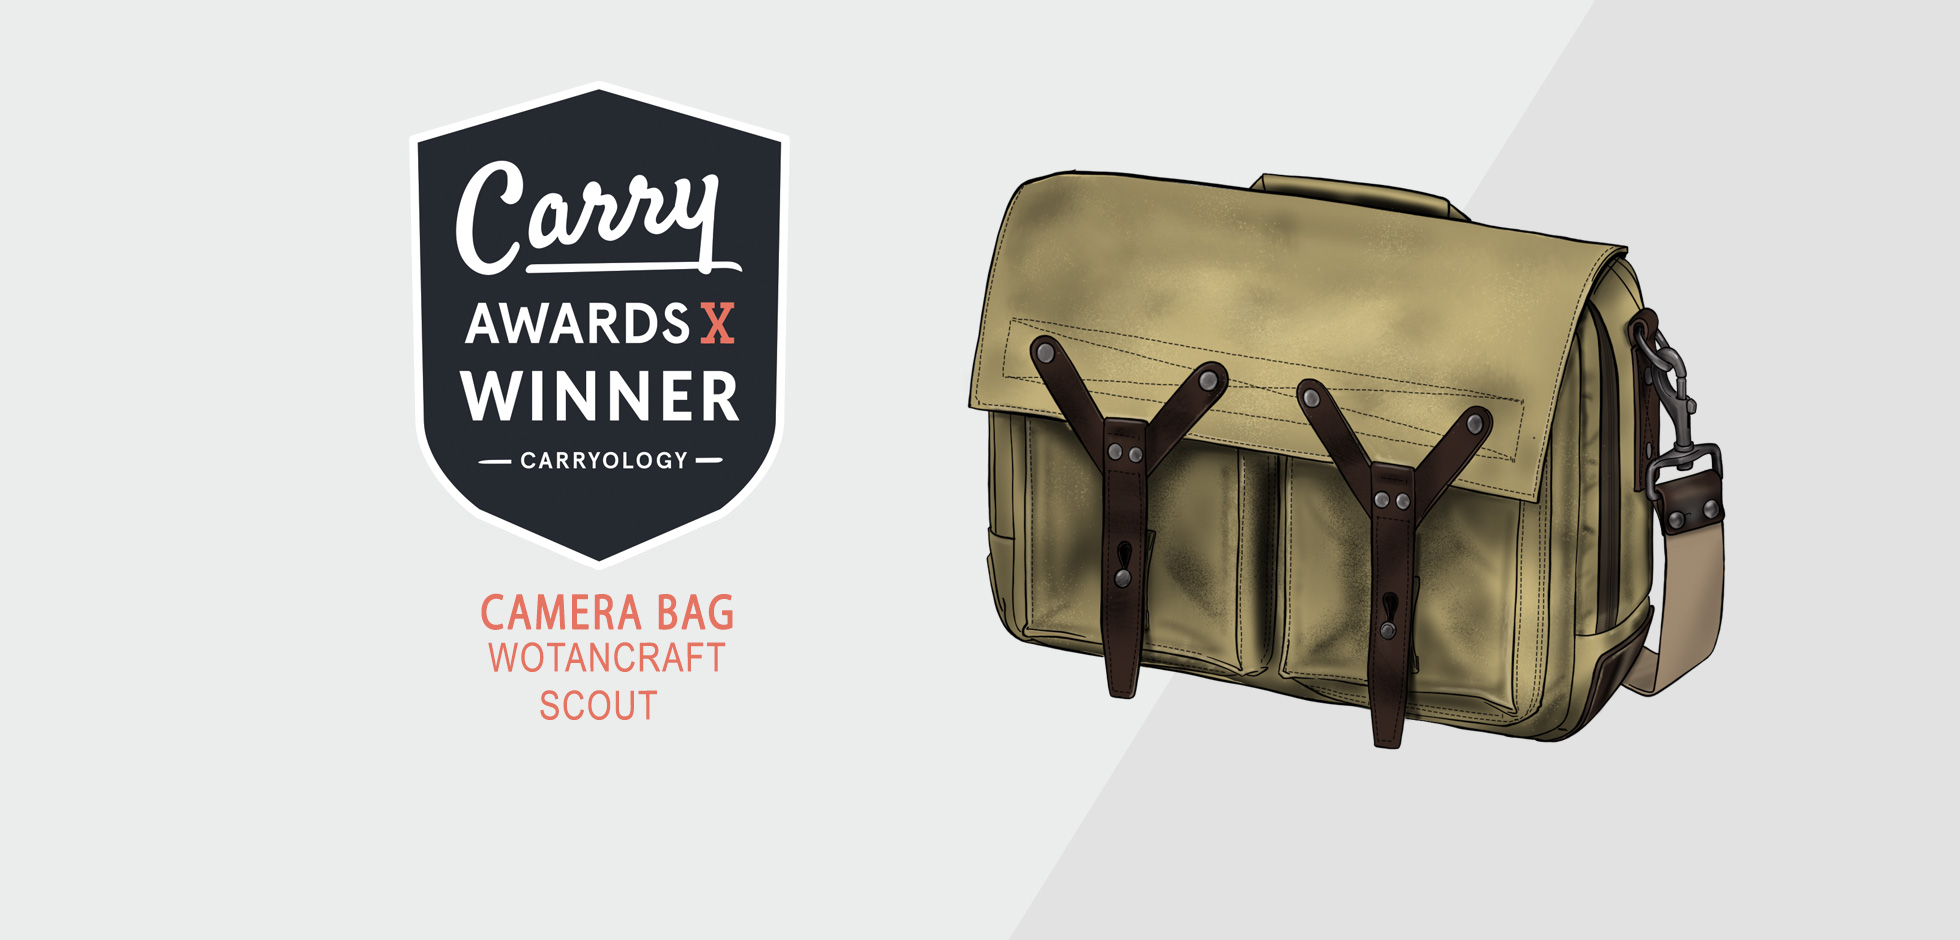 Carry Awards X Best Camera Bag Winner